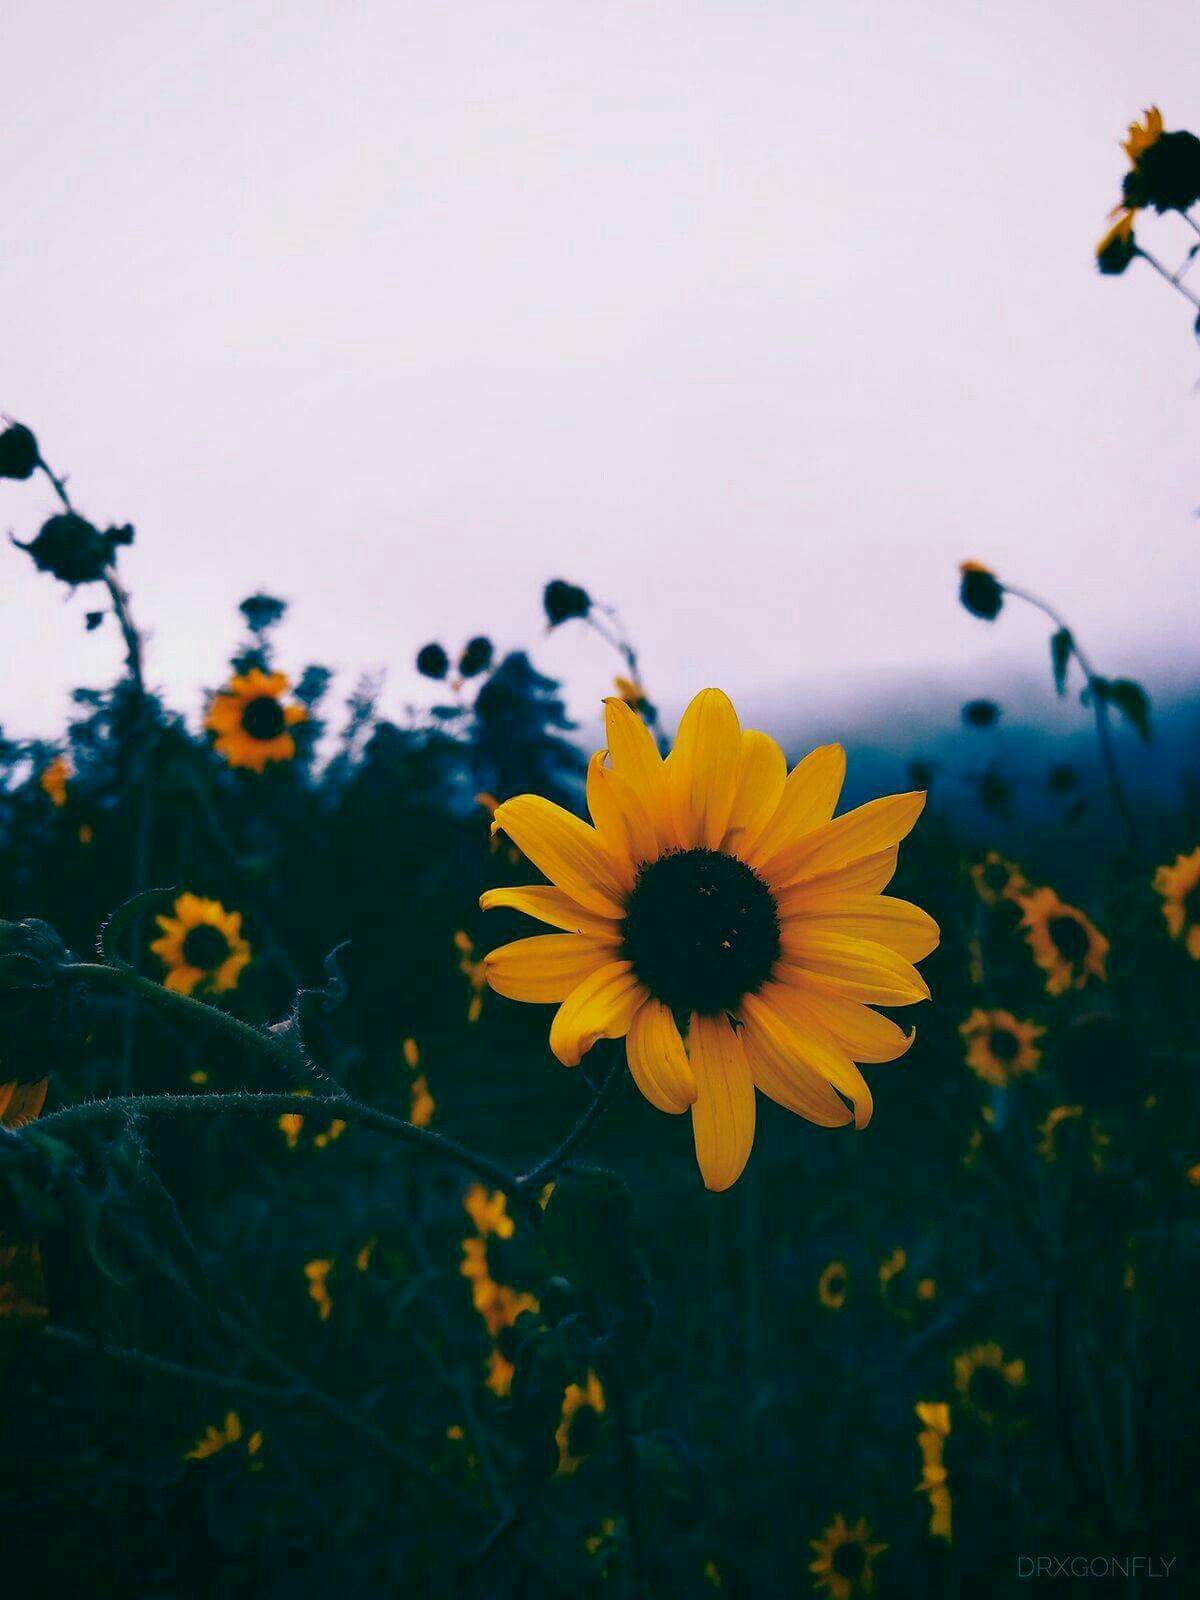 A sunflower in a field of sunflowers. - Sunflower